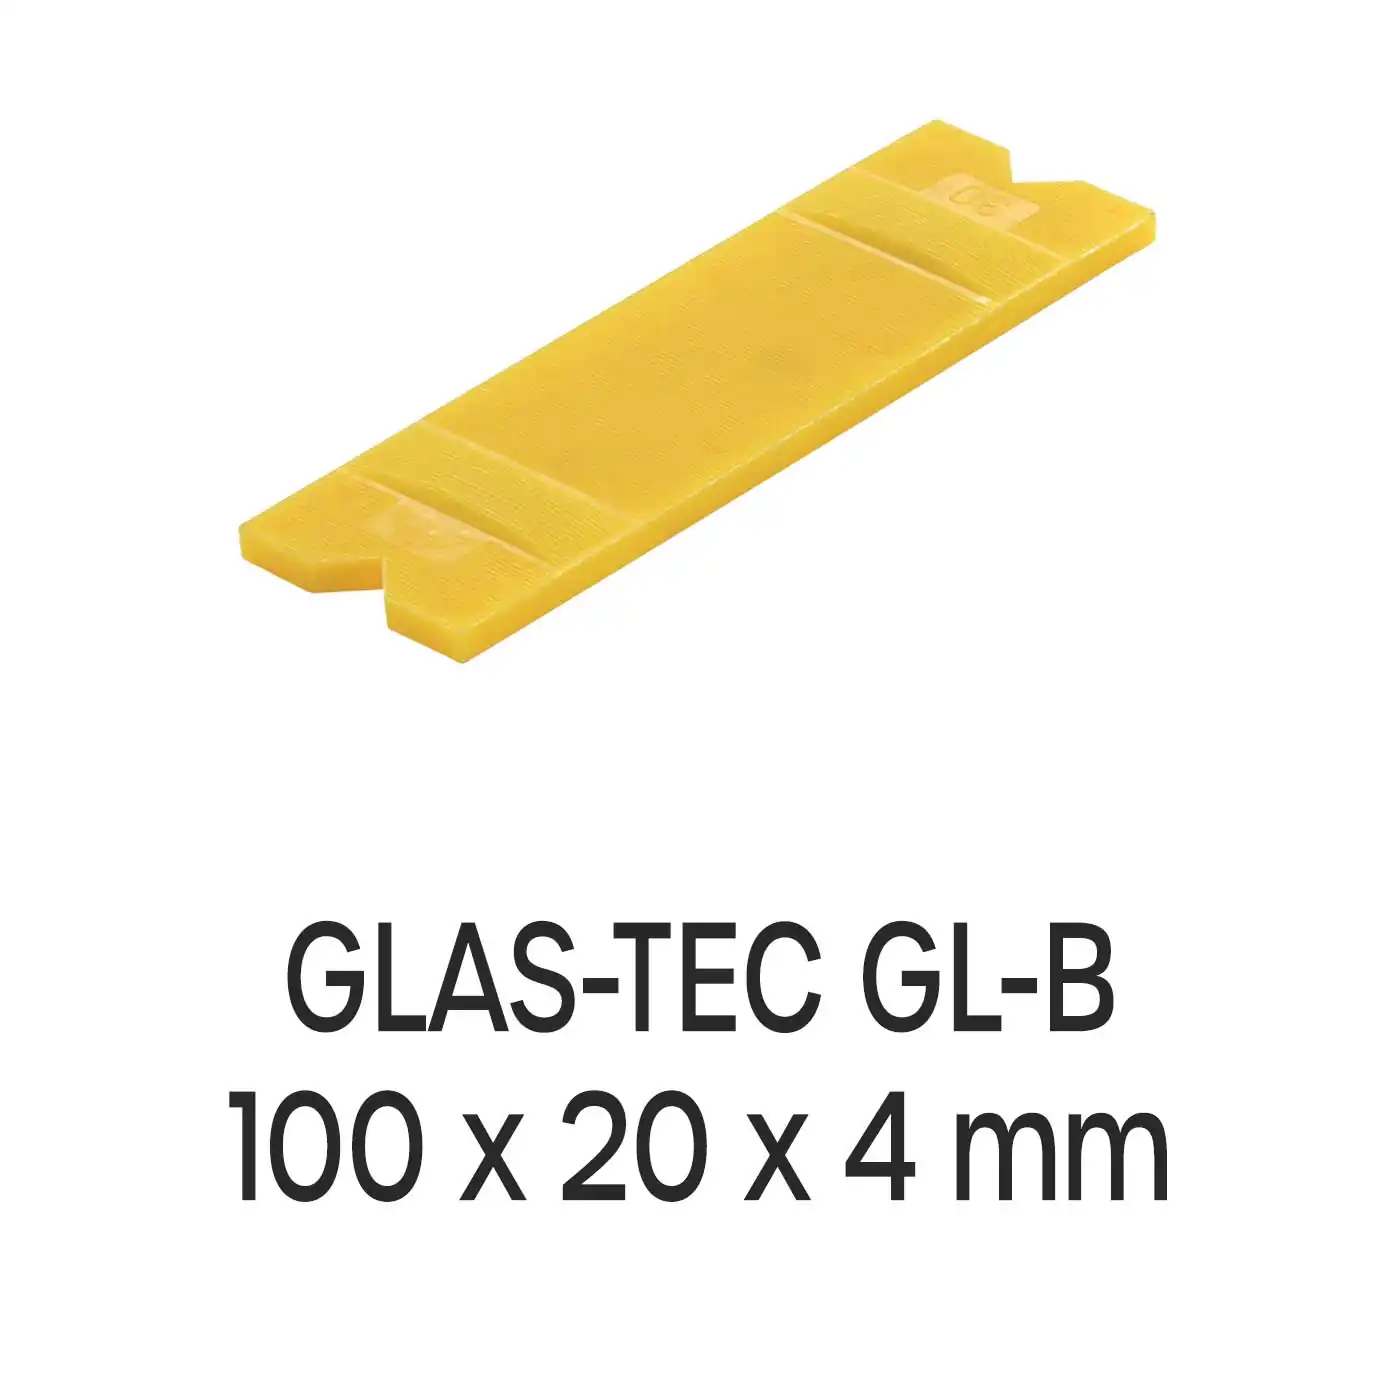 Roto GLAS-TEC GL-B 100 x 20 x 4 mm Verglasungsklötze 1000 Stück